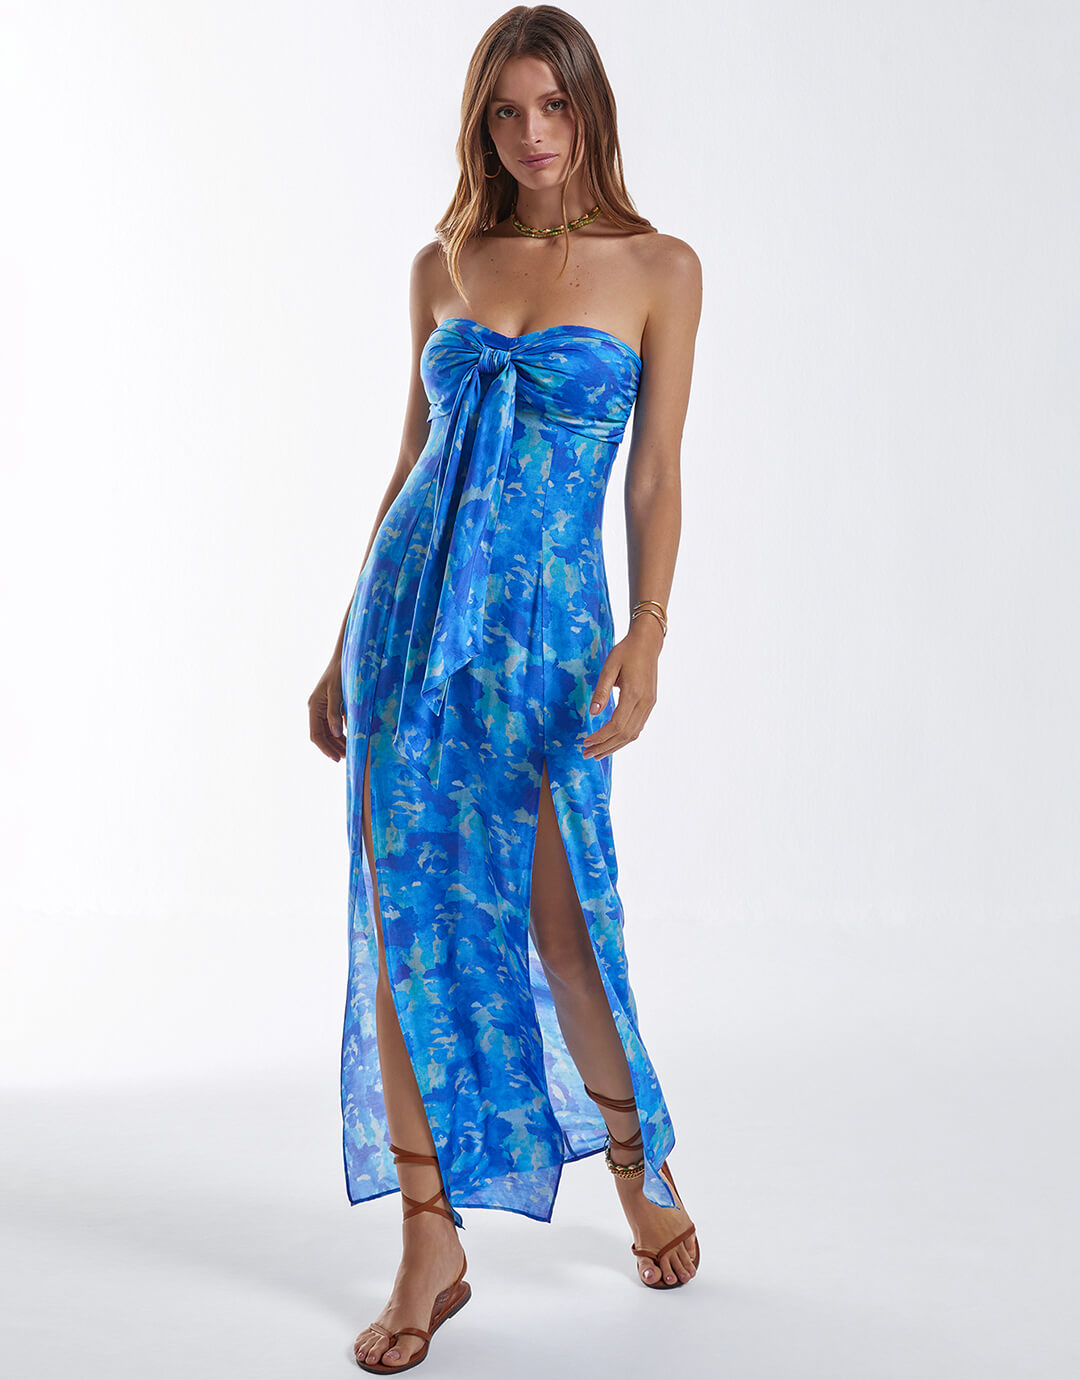 Yves Alexia Long Dress - Blue - Simply Beach UK